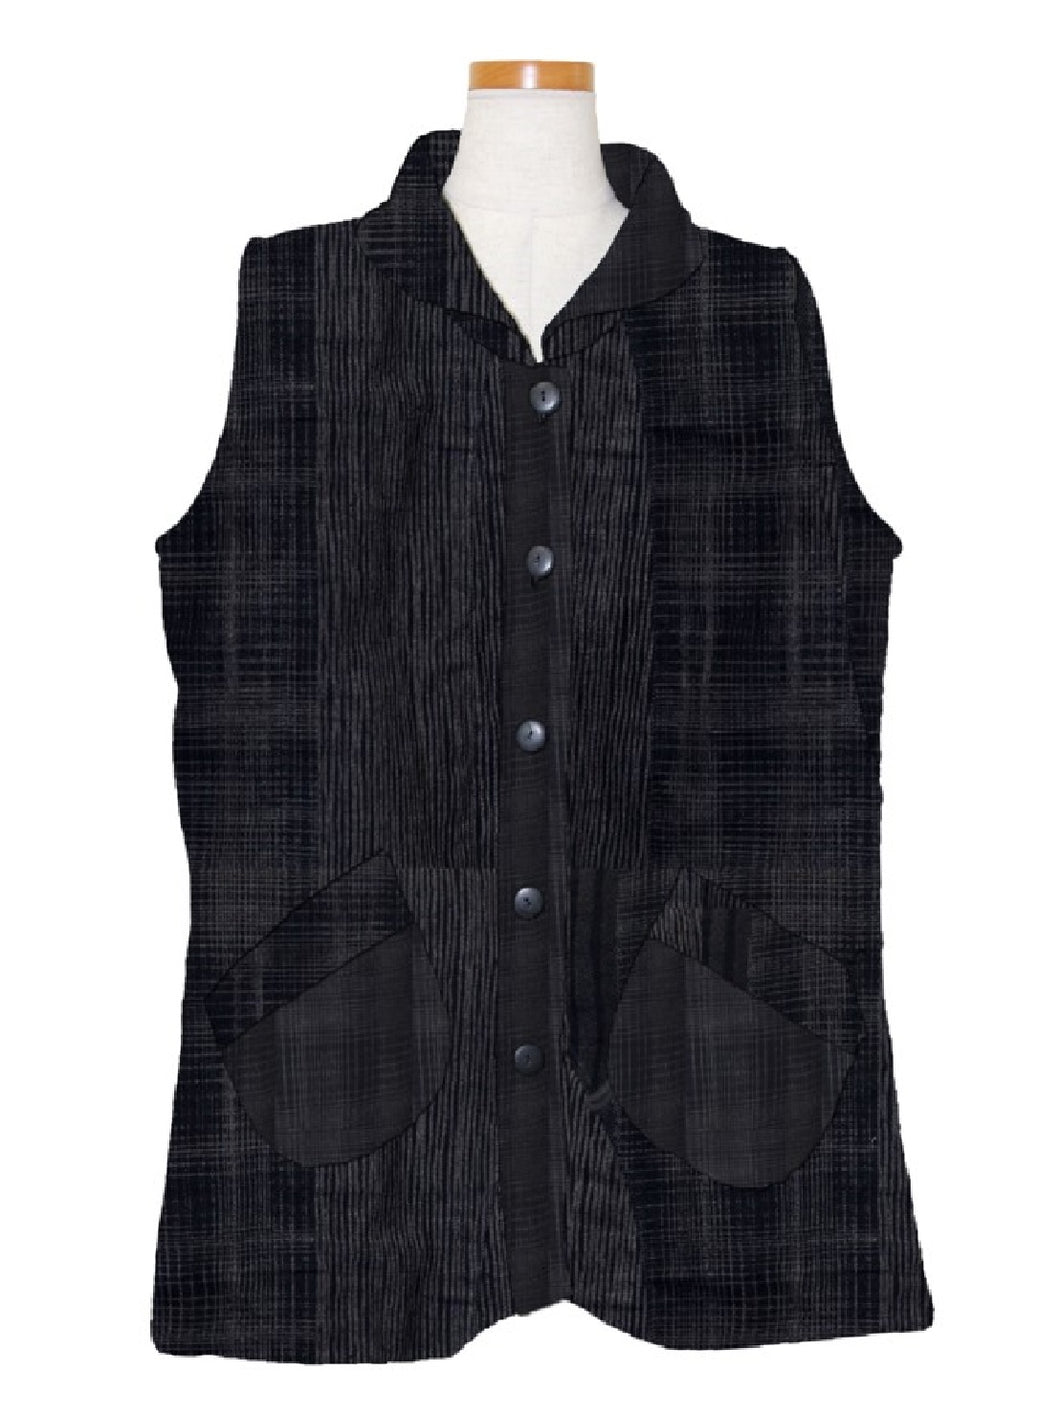 Collared Vest - Fleece Lined - Checker Print - Black